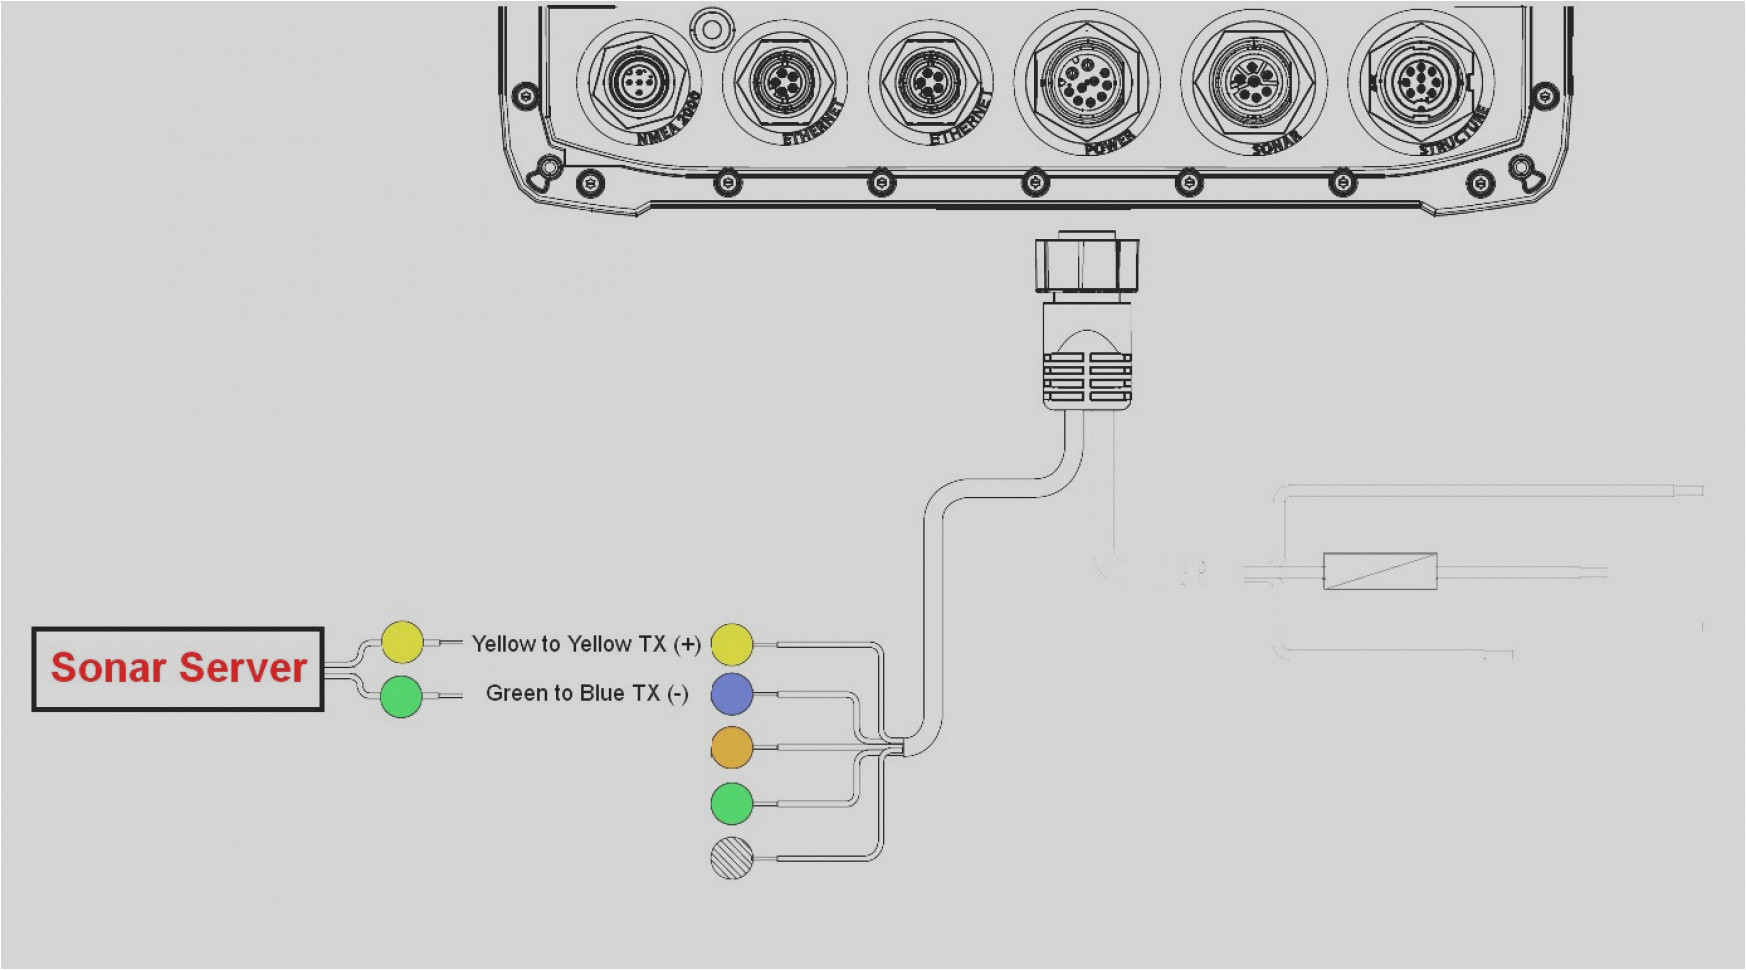 lowrance hds 7 wiring diagram mastertopforum me prepossessing with 4wonderful of lowrance hds 7 wiring diagram